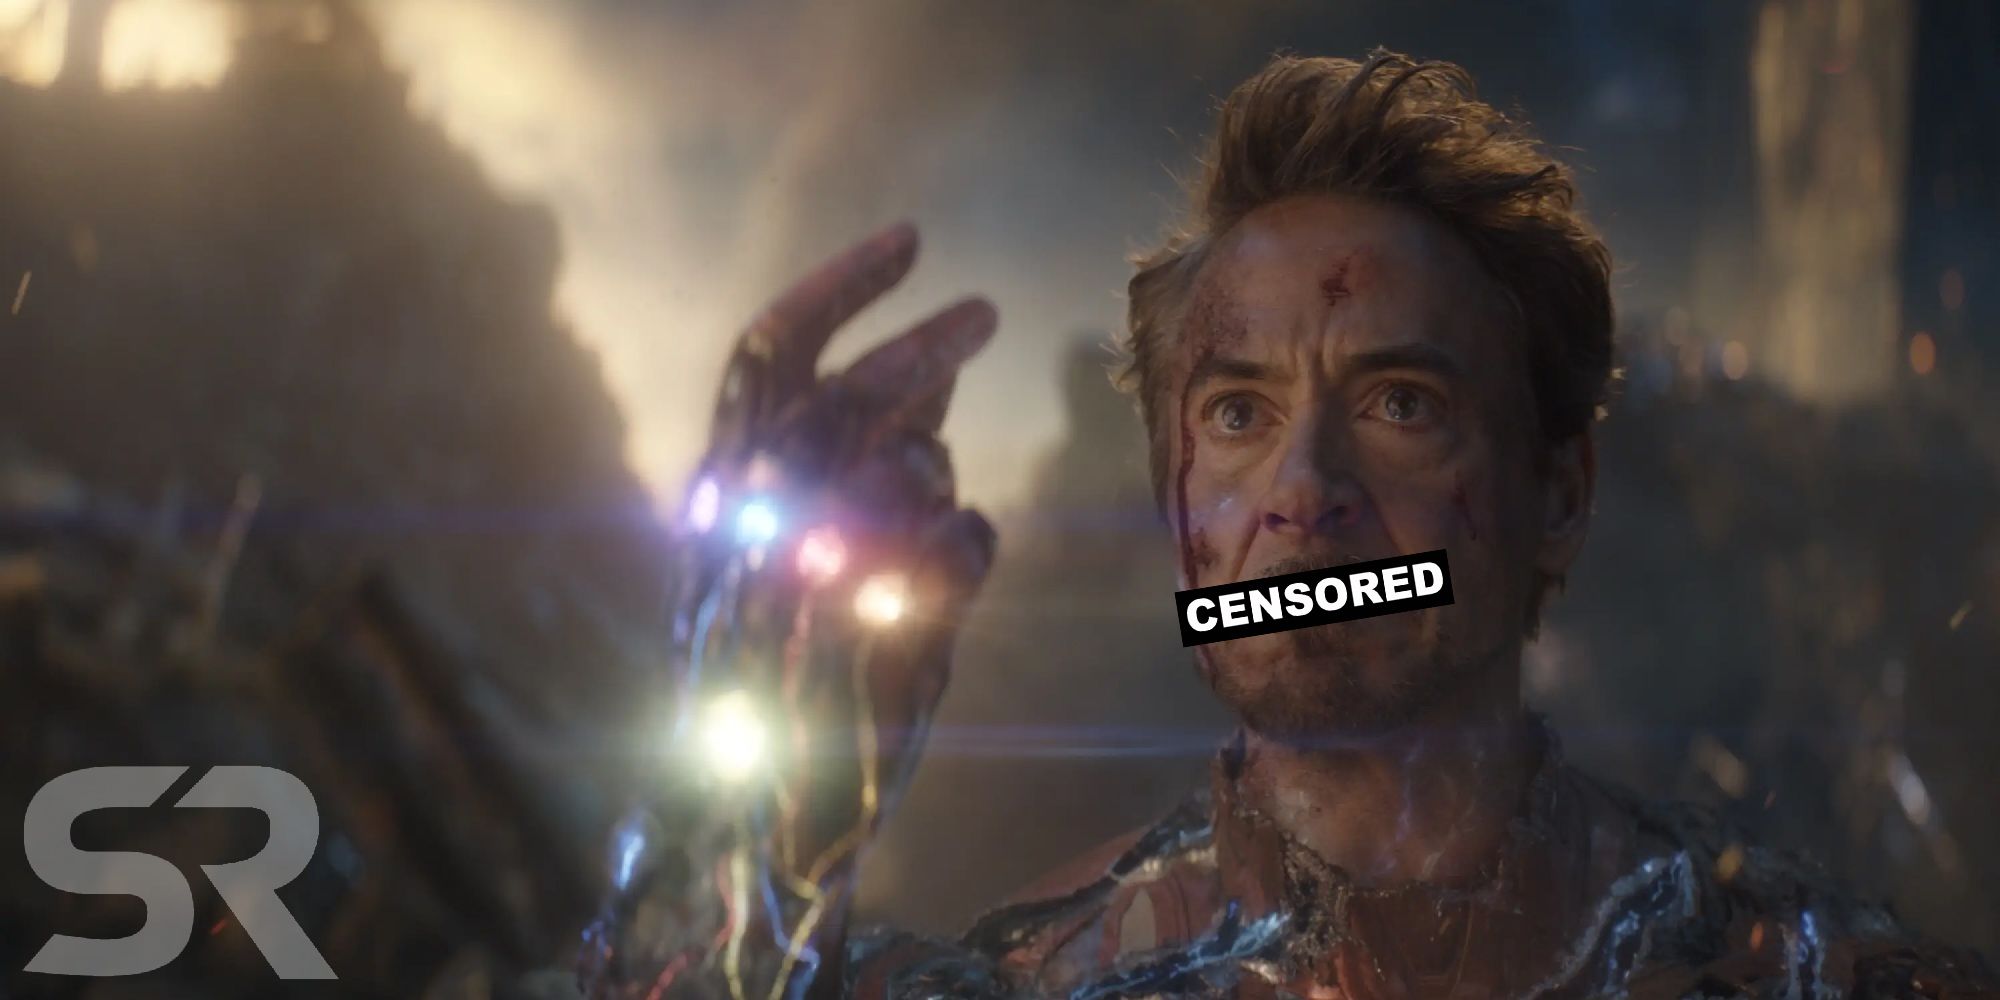 Robert Downey Jr as Iron Man in Avengers Endgame